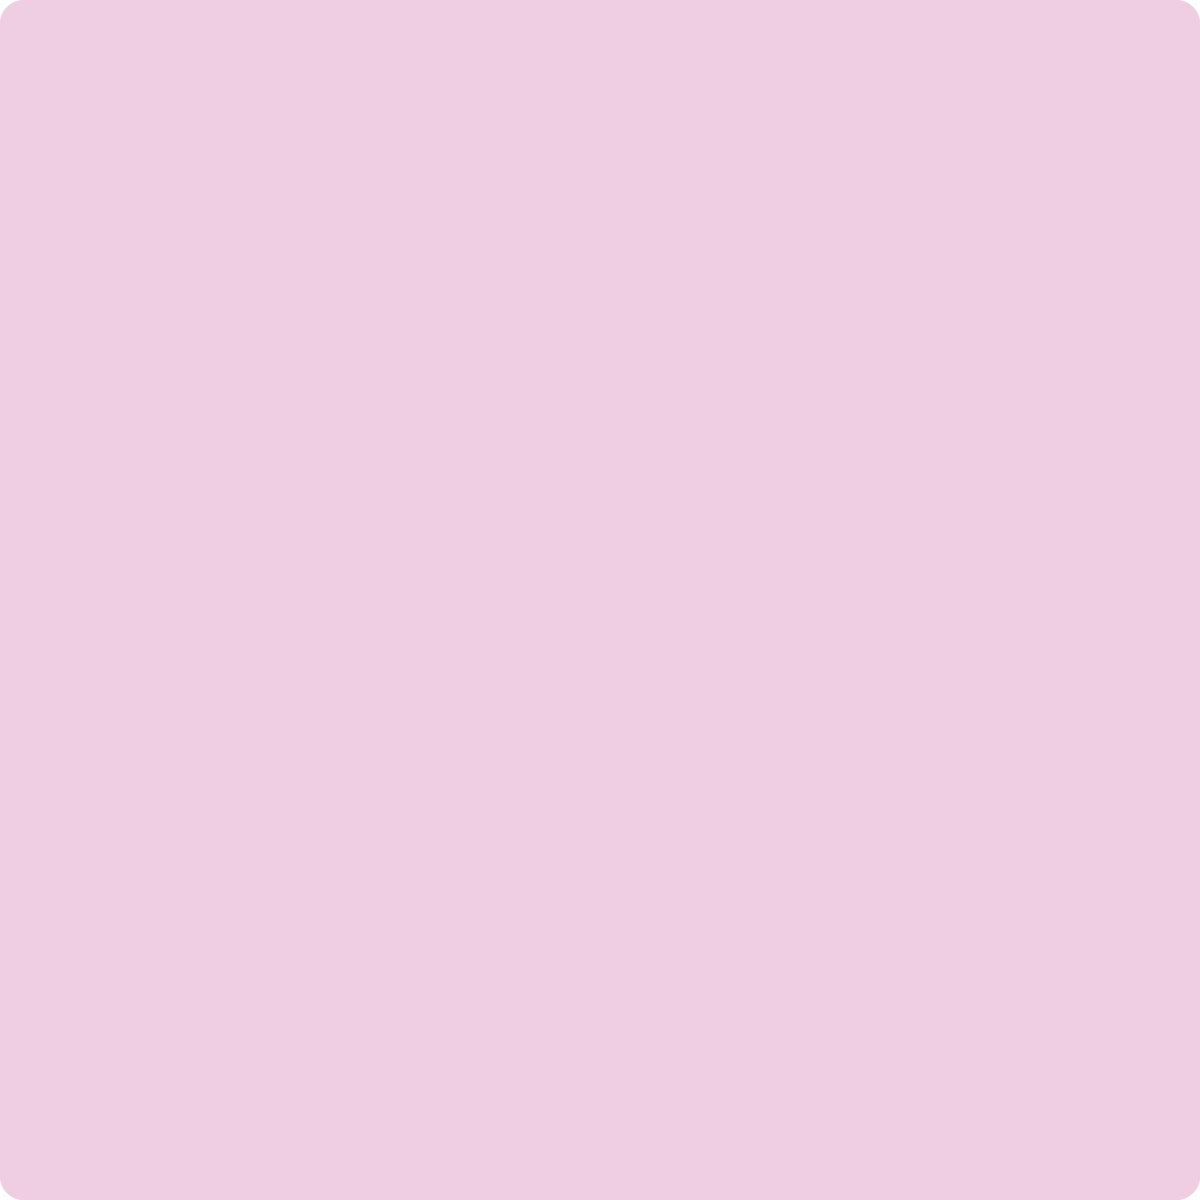 1325 Pure Pink by Benjamin Moore